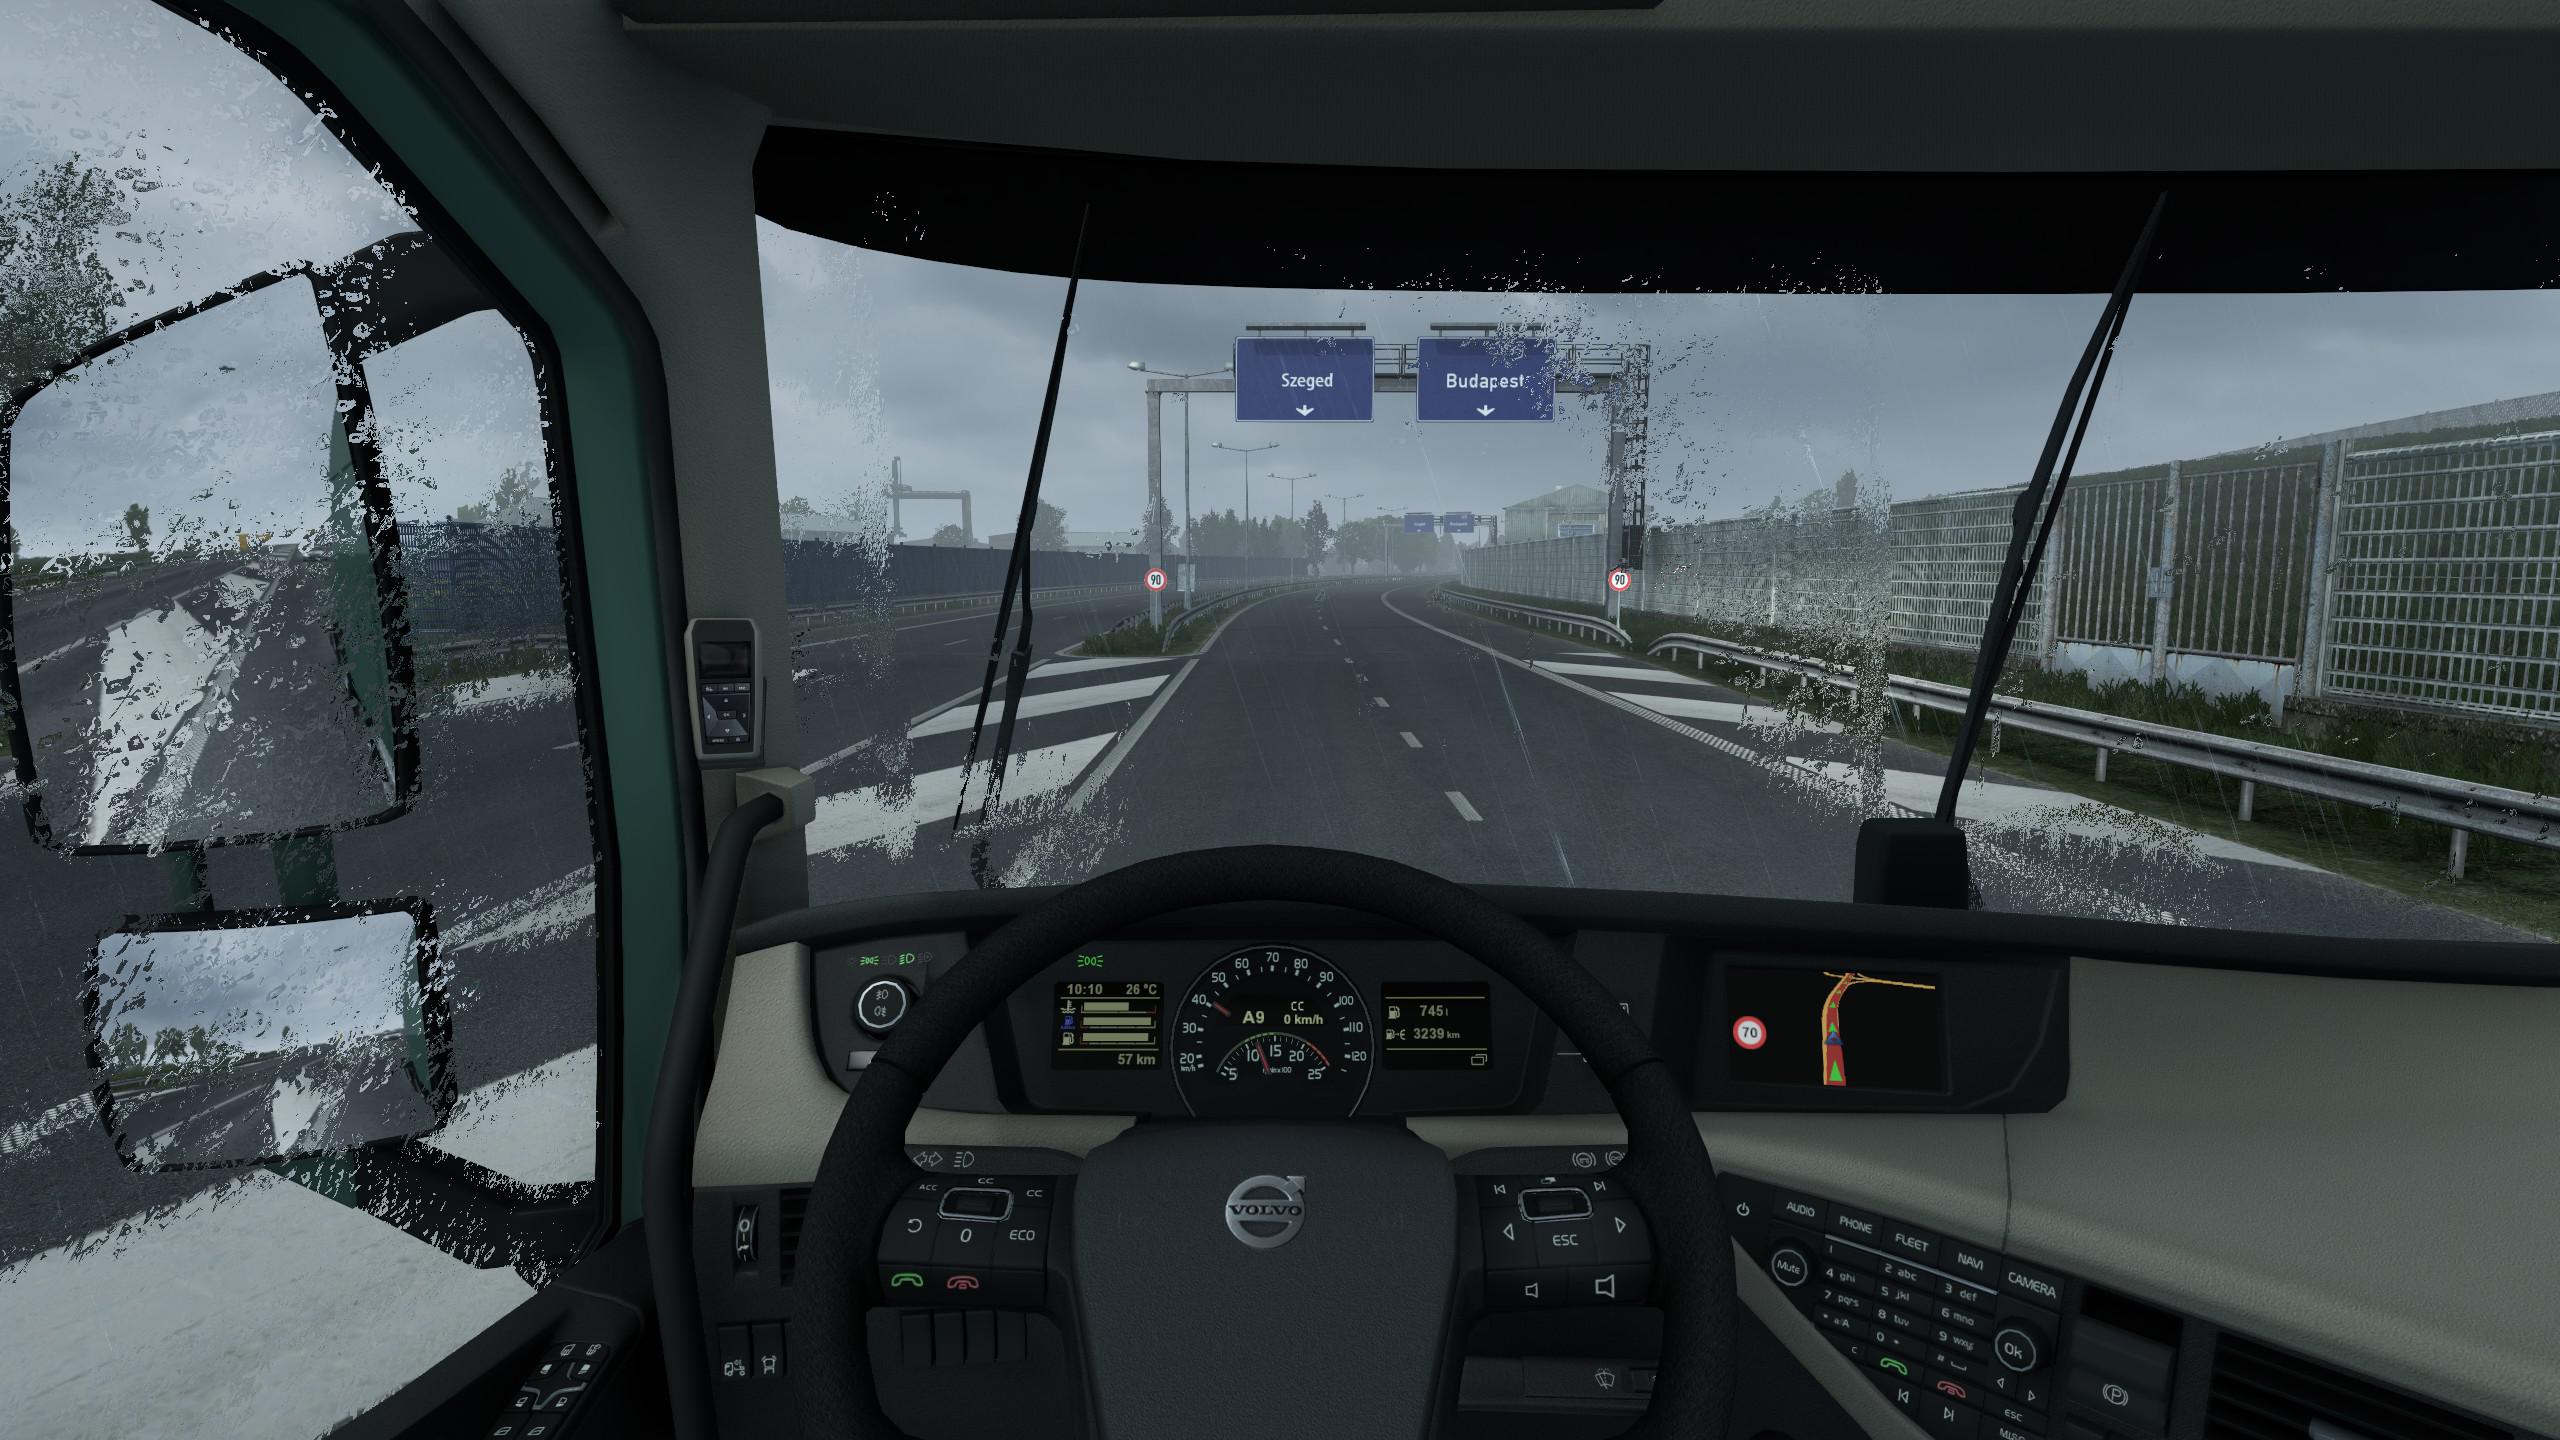 Моды на реалистичность 1.20 4. Euro Truck Simulator 2 дождь. Евро трак симулятор 2018. Realistic Rain ETS 2. Improved weather етс 2.